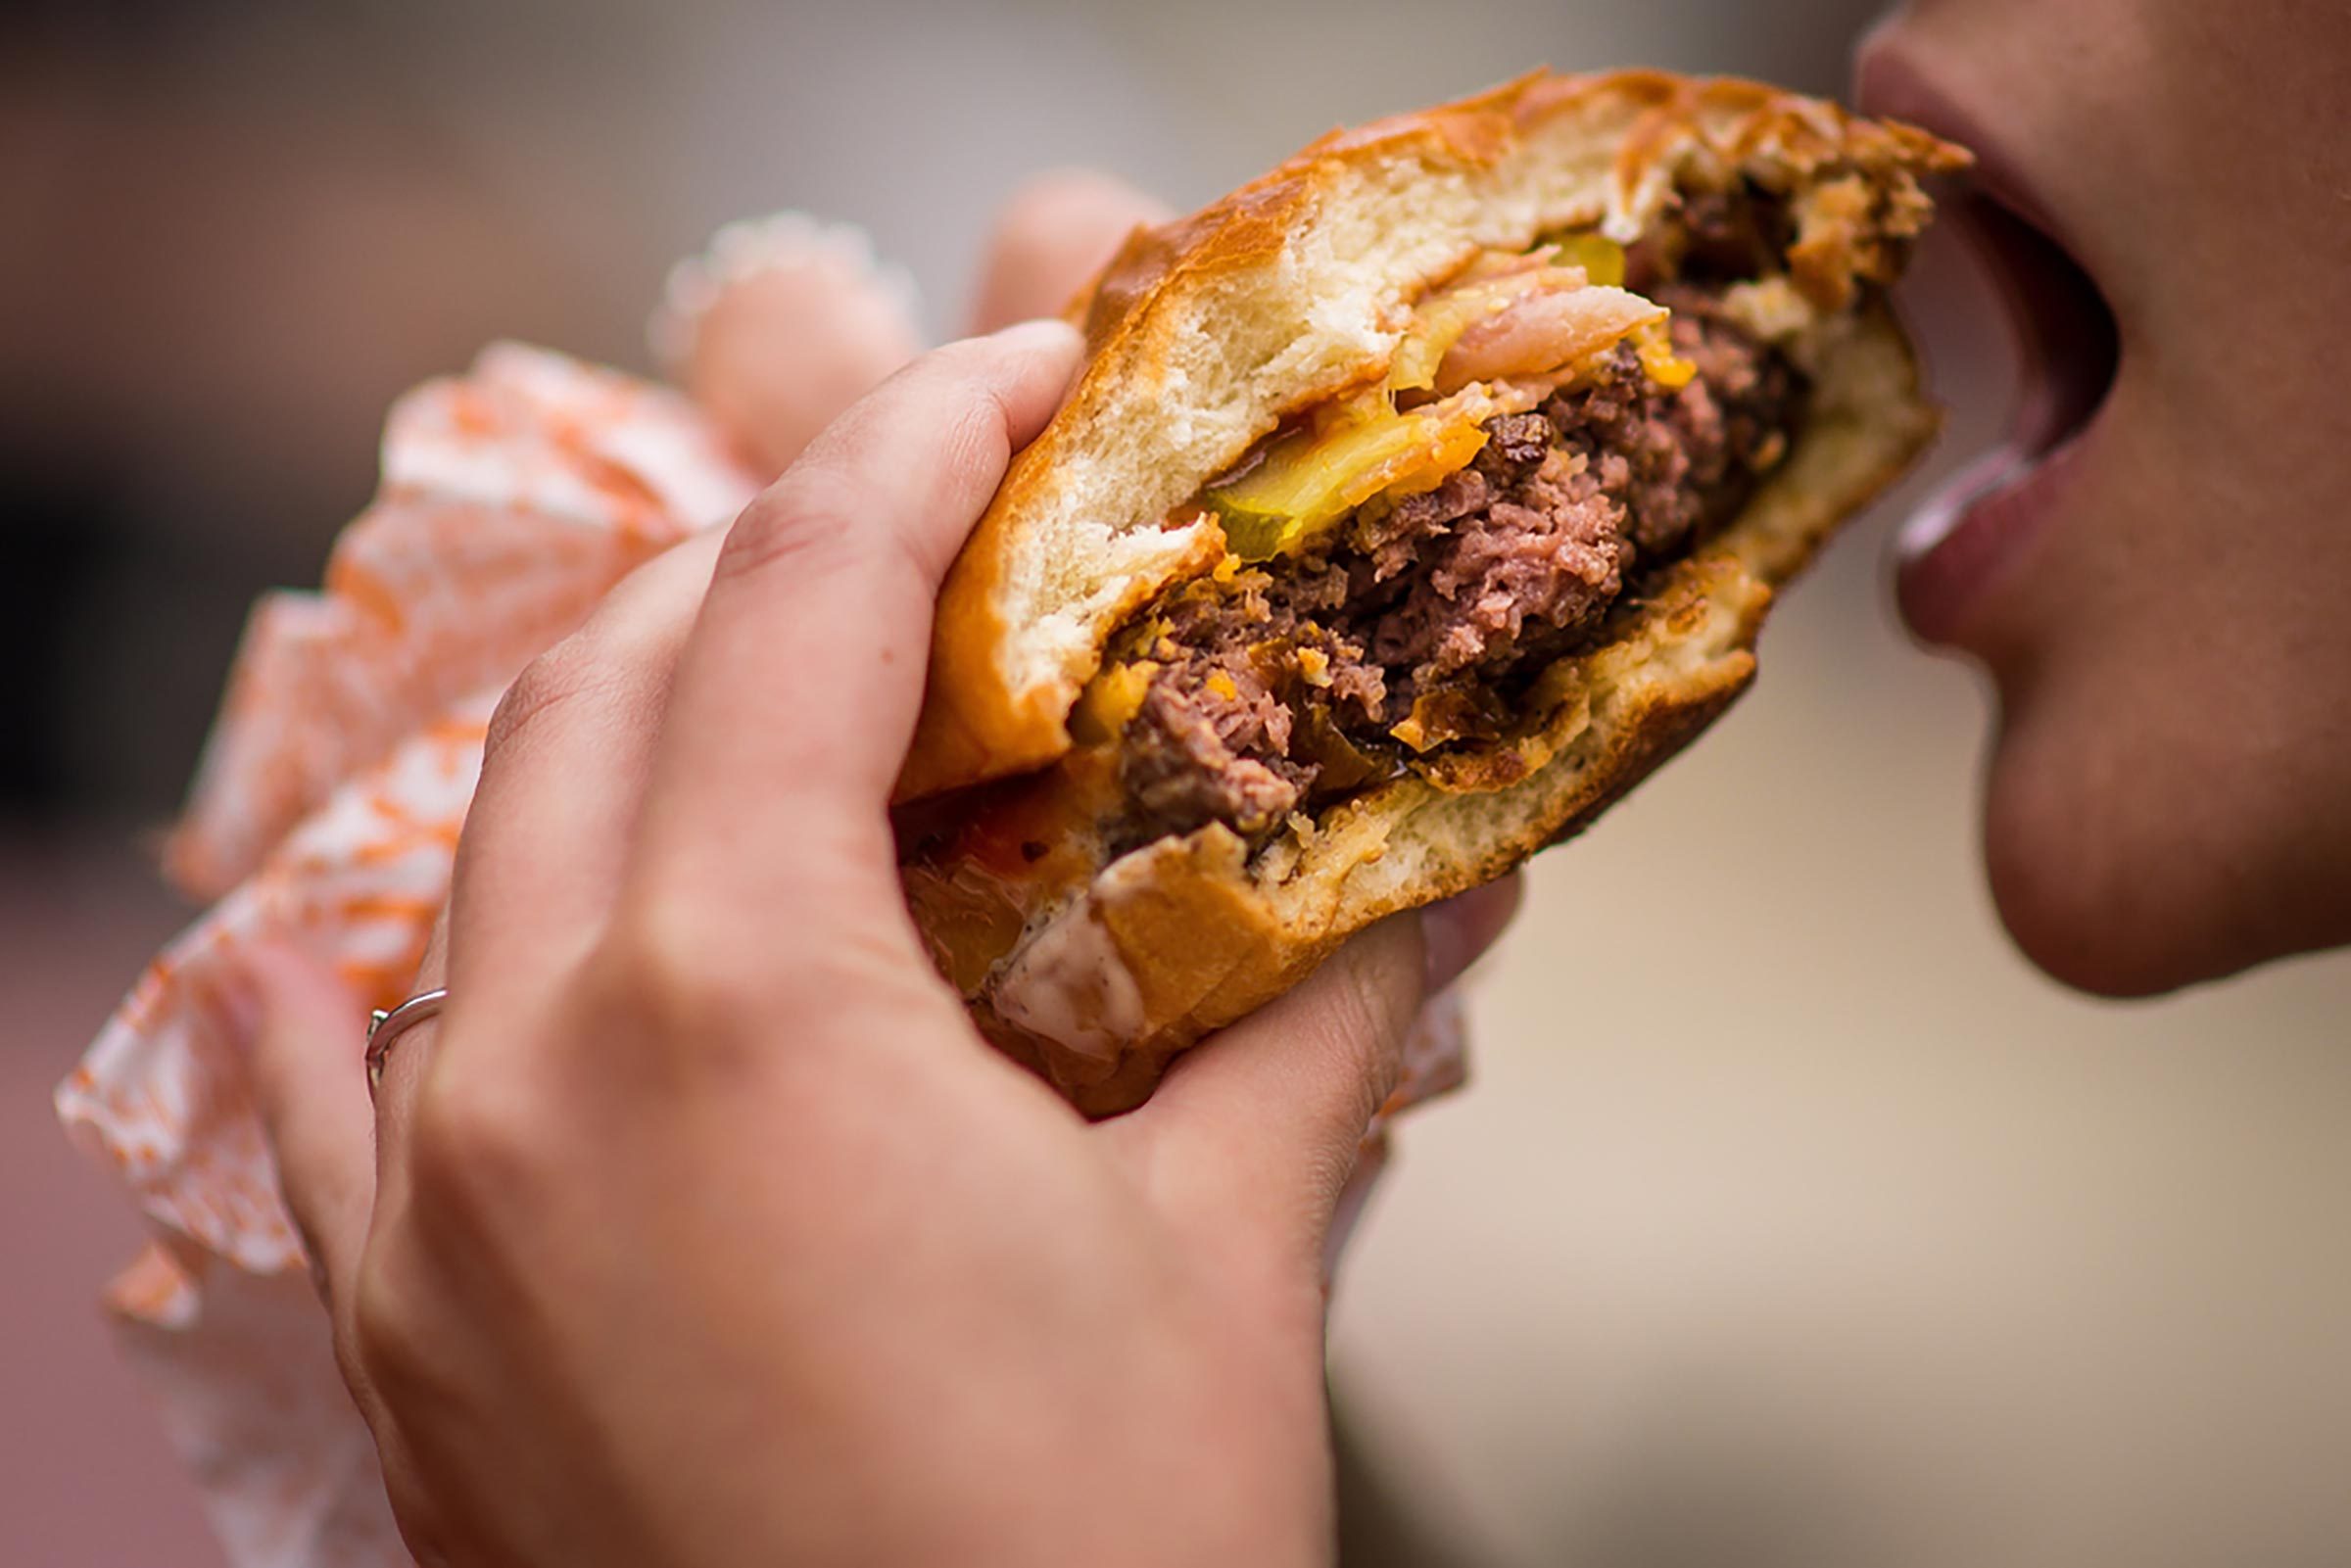 hands holding burger